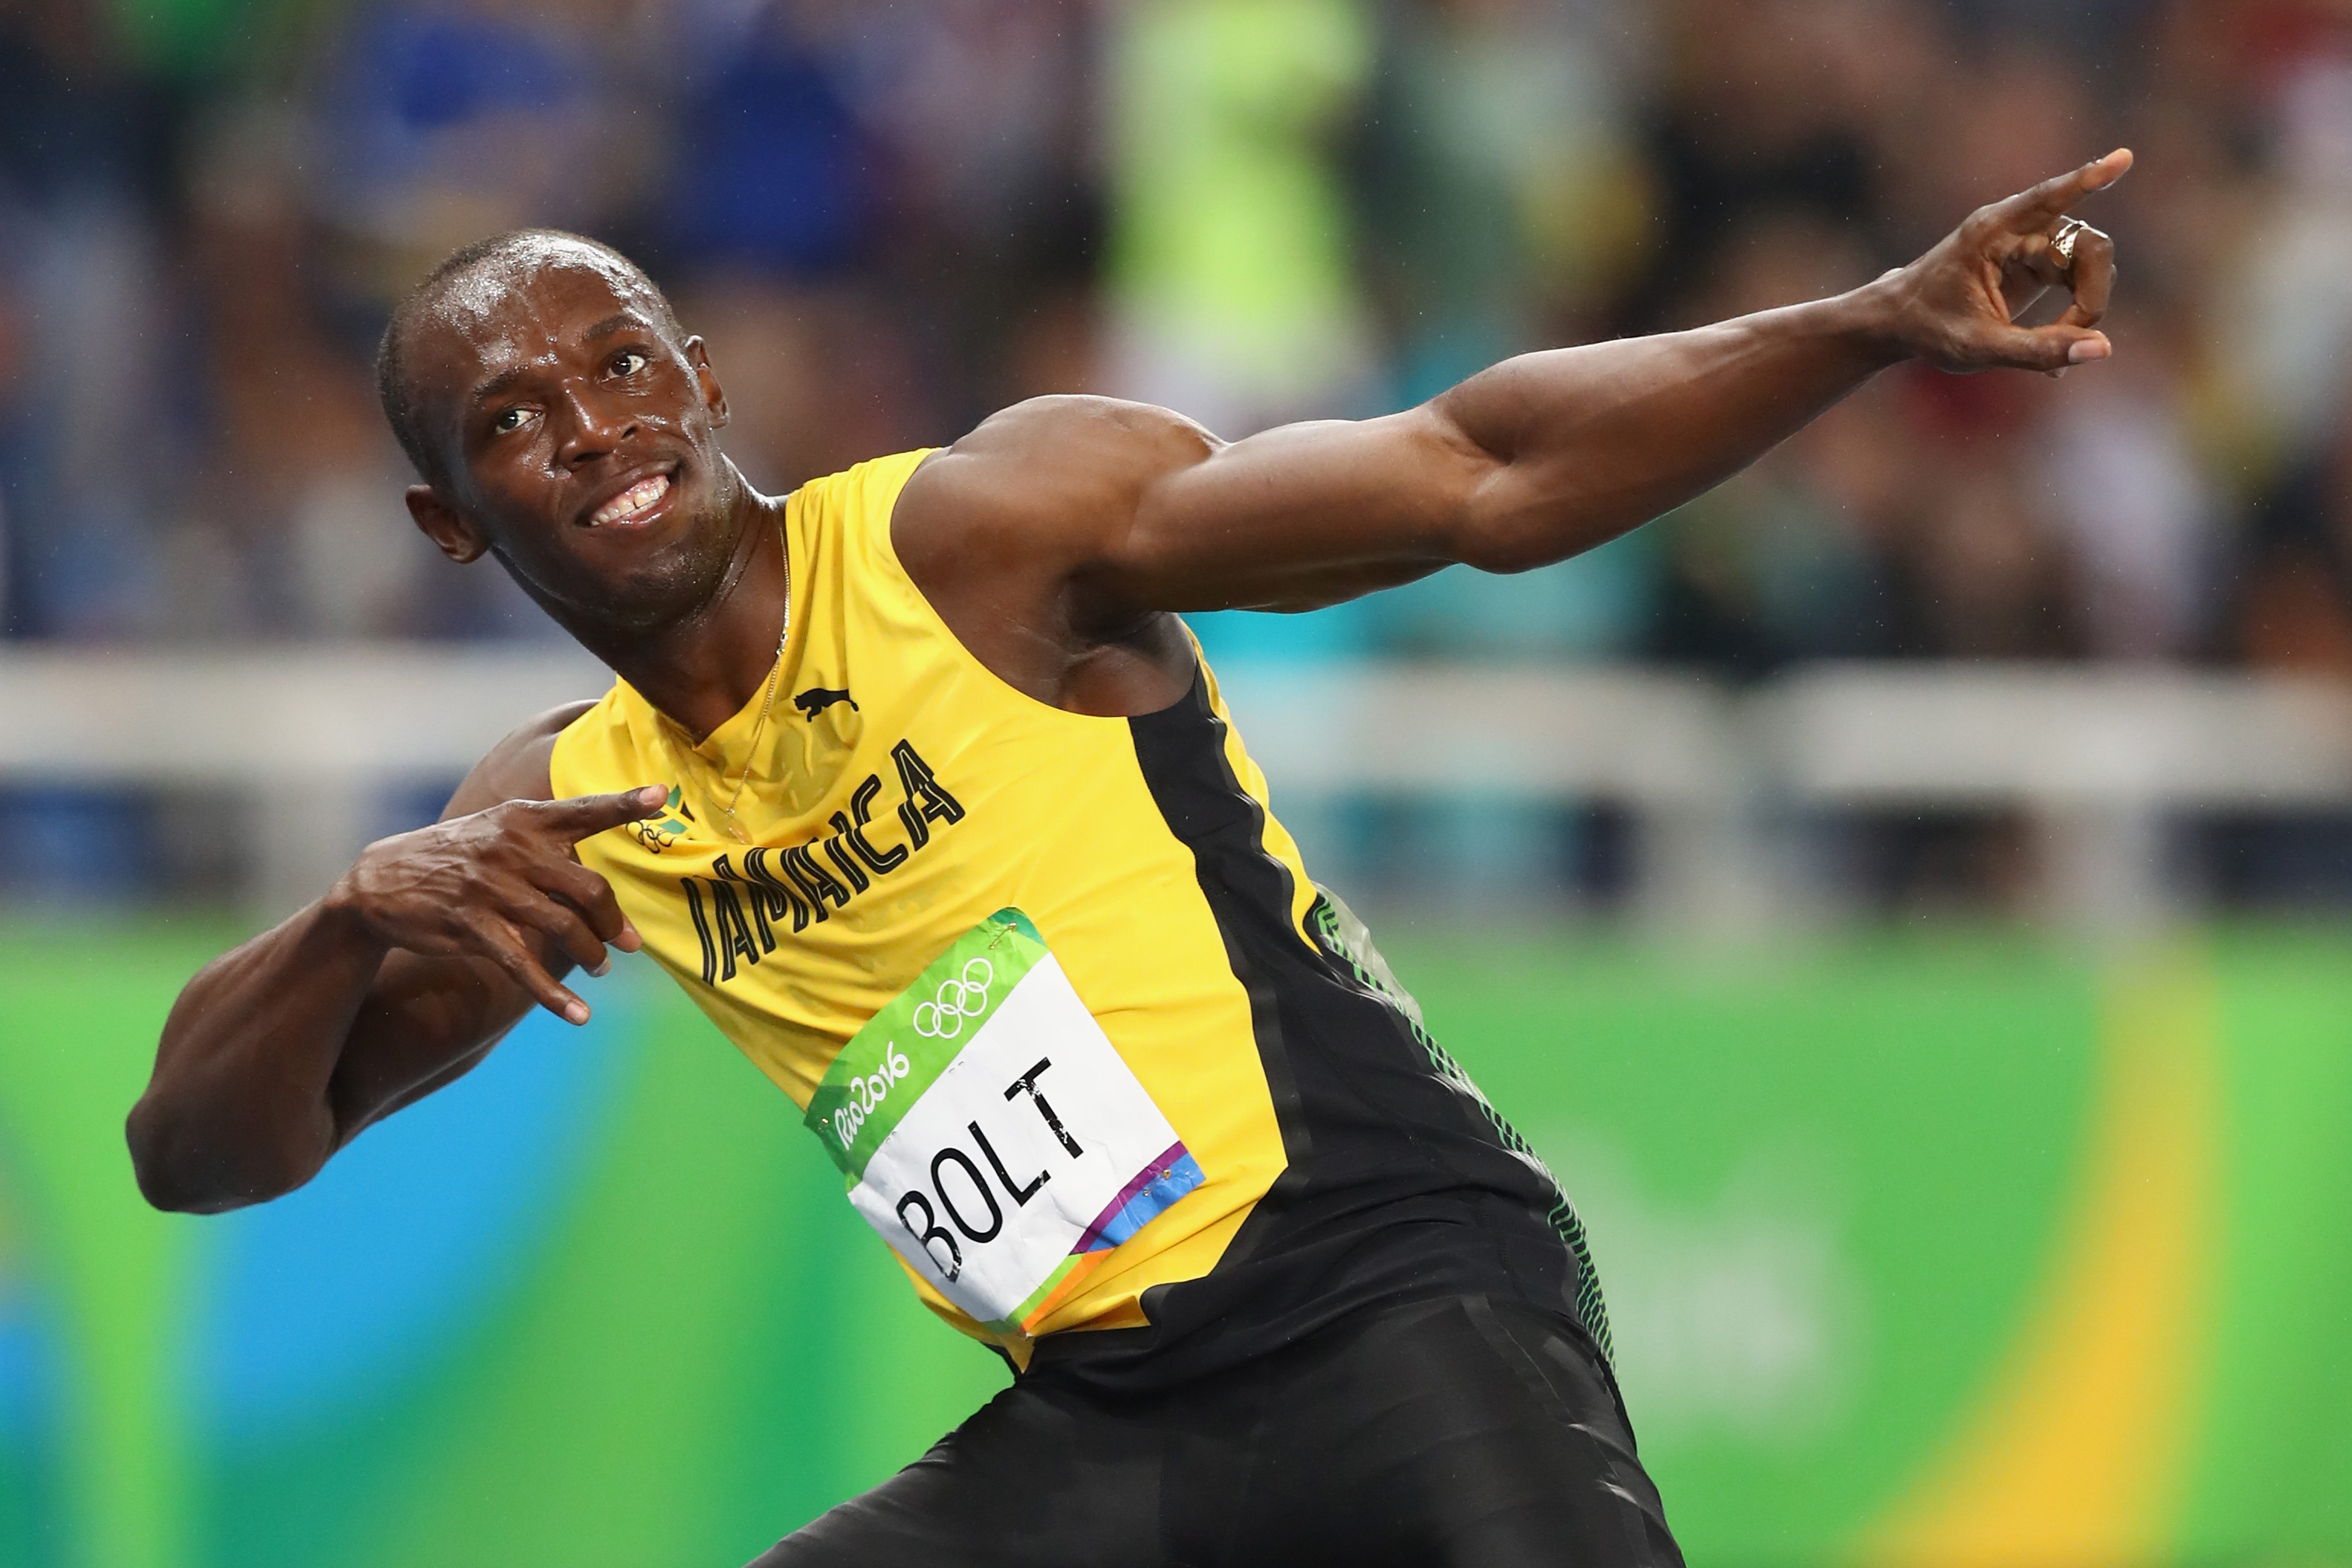 Легендарные спортсмены. Усейн болт 9.58. Foto Ysein Bolt. Усейн болт 100 метров.